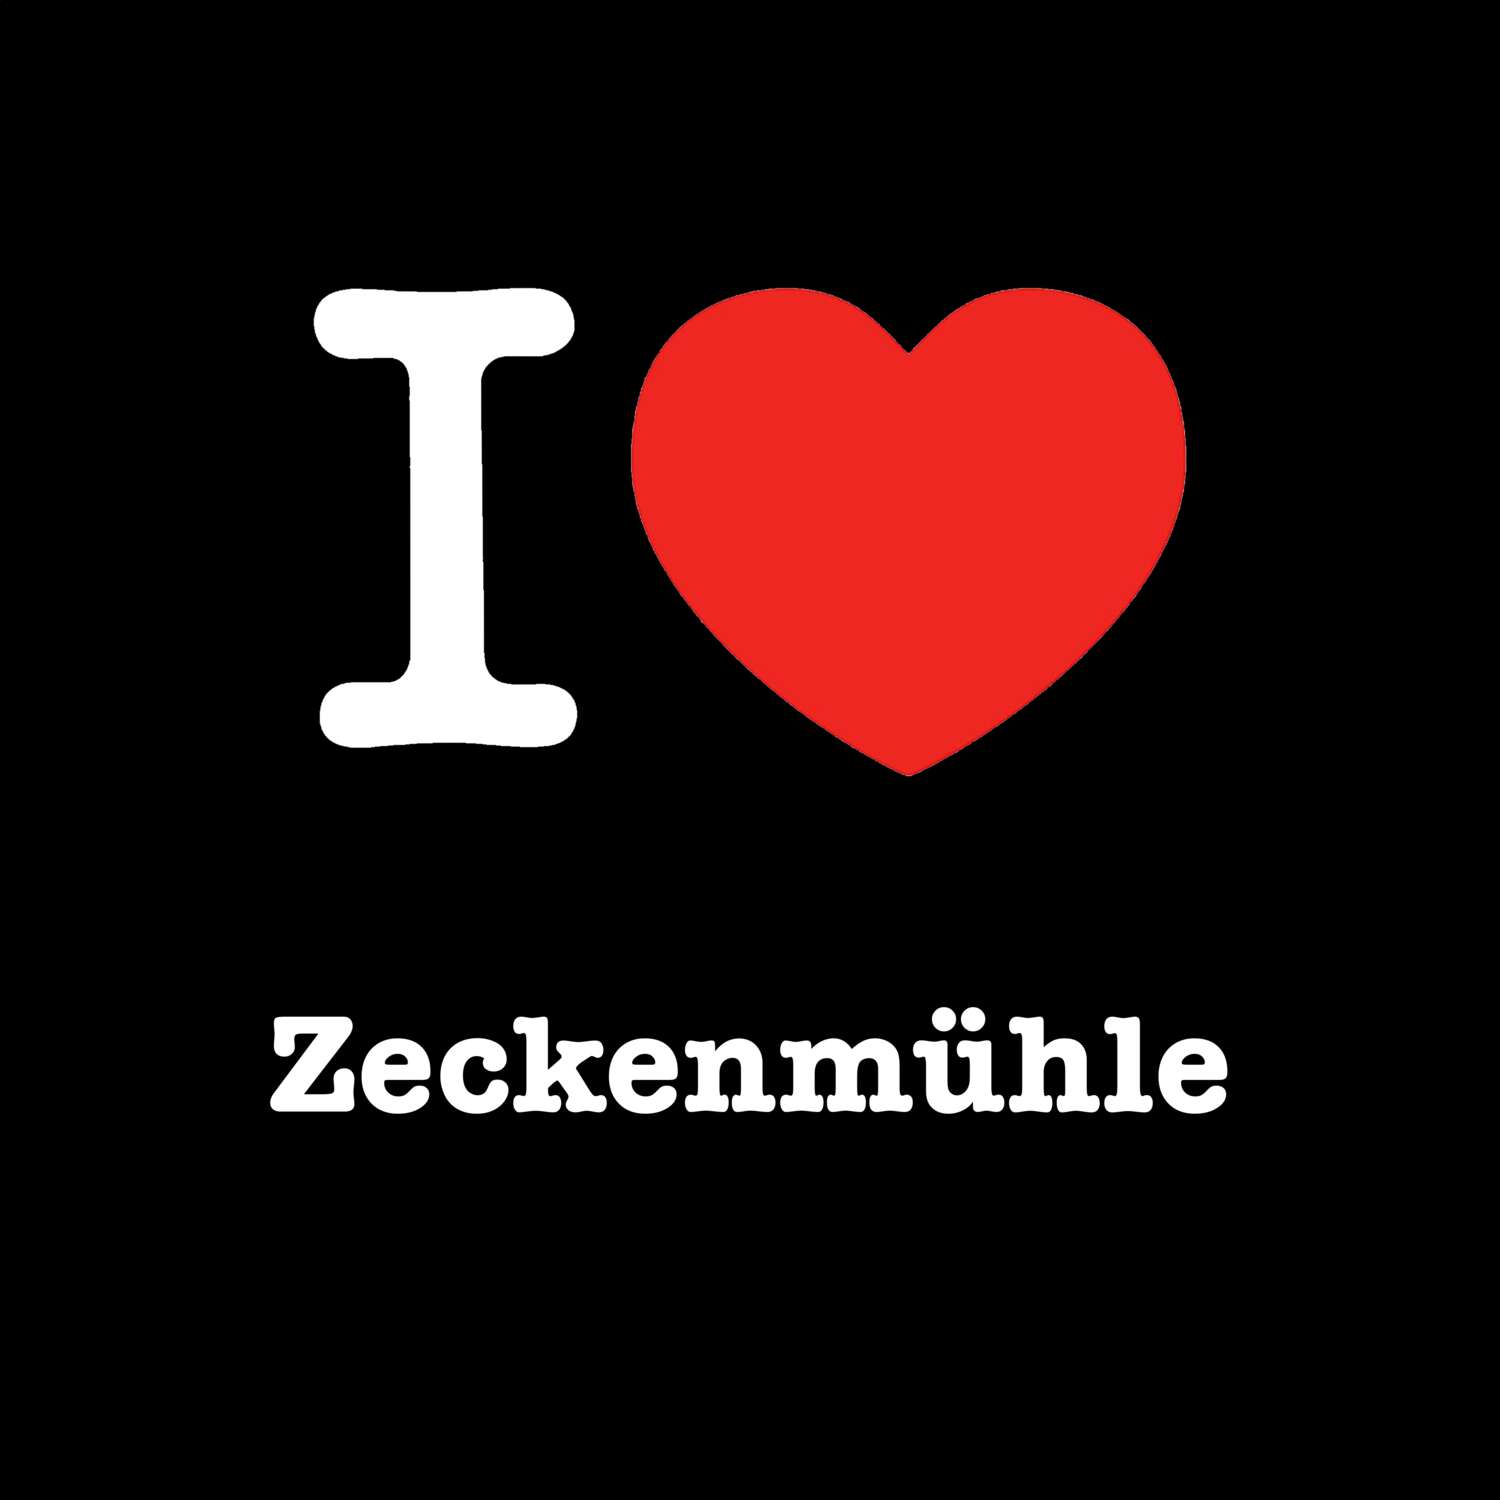 Zeckenmühle T-Shirt »I love«